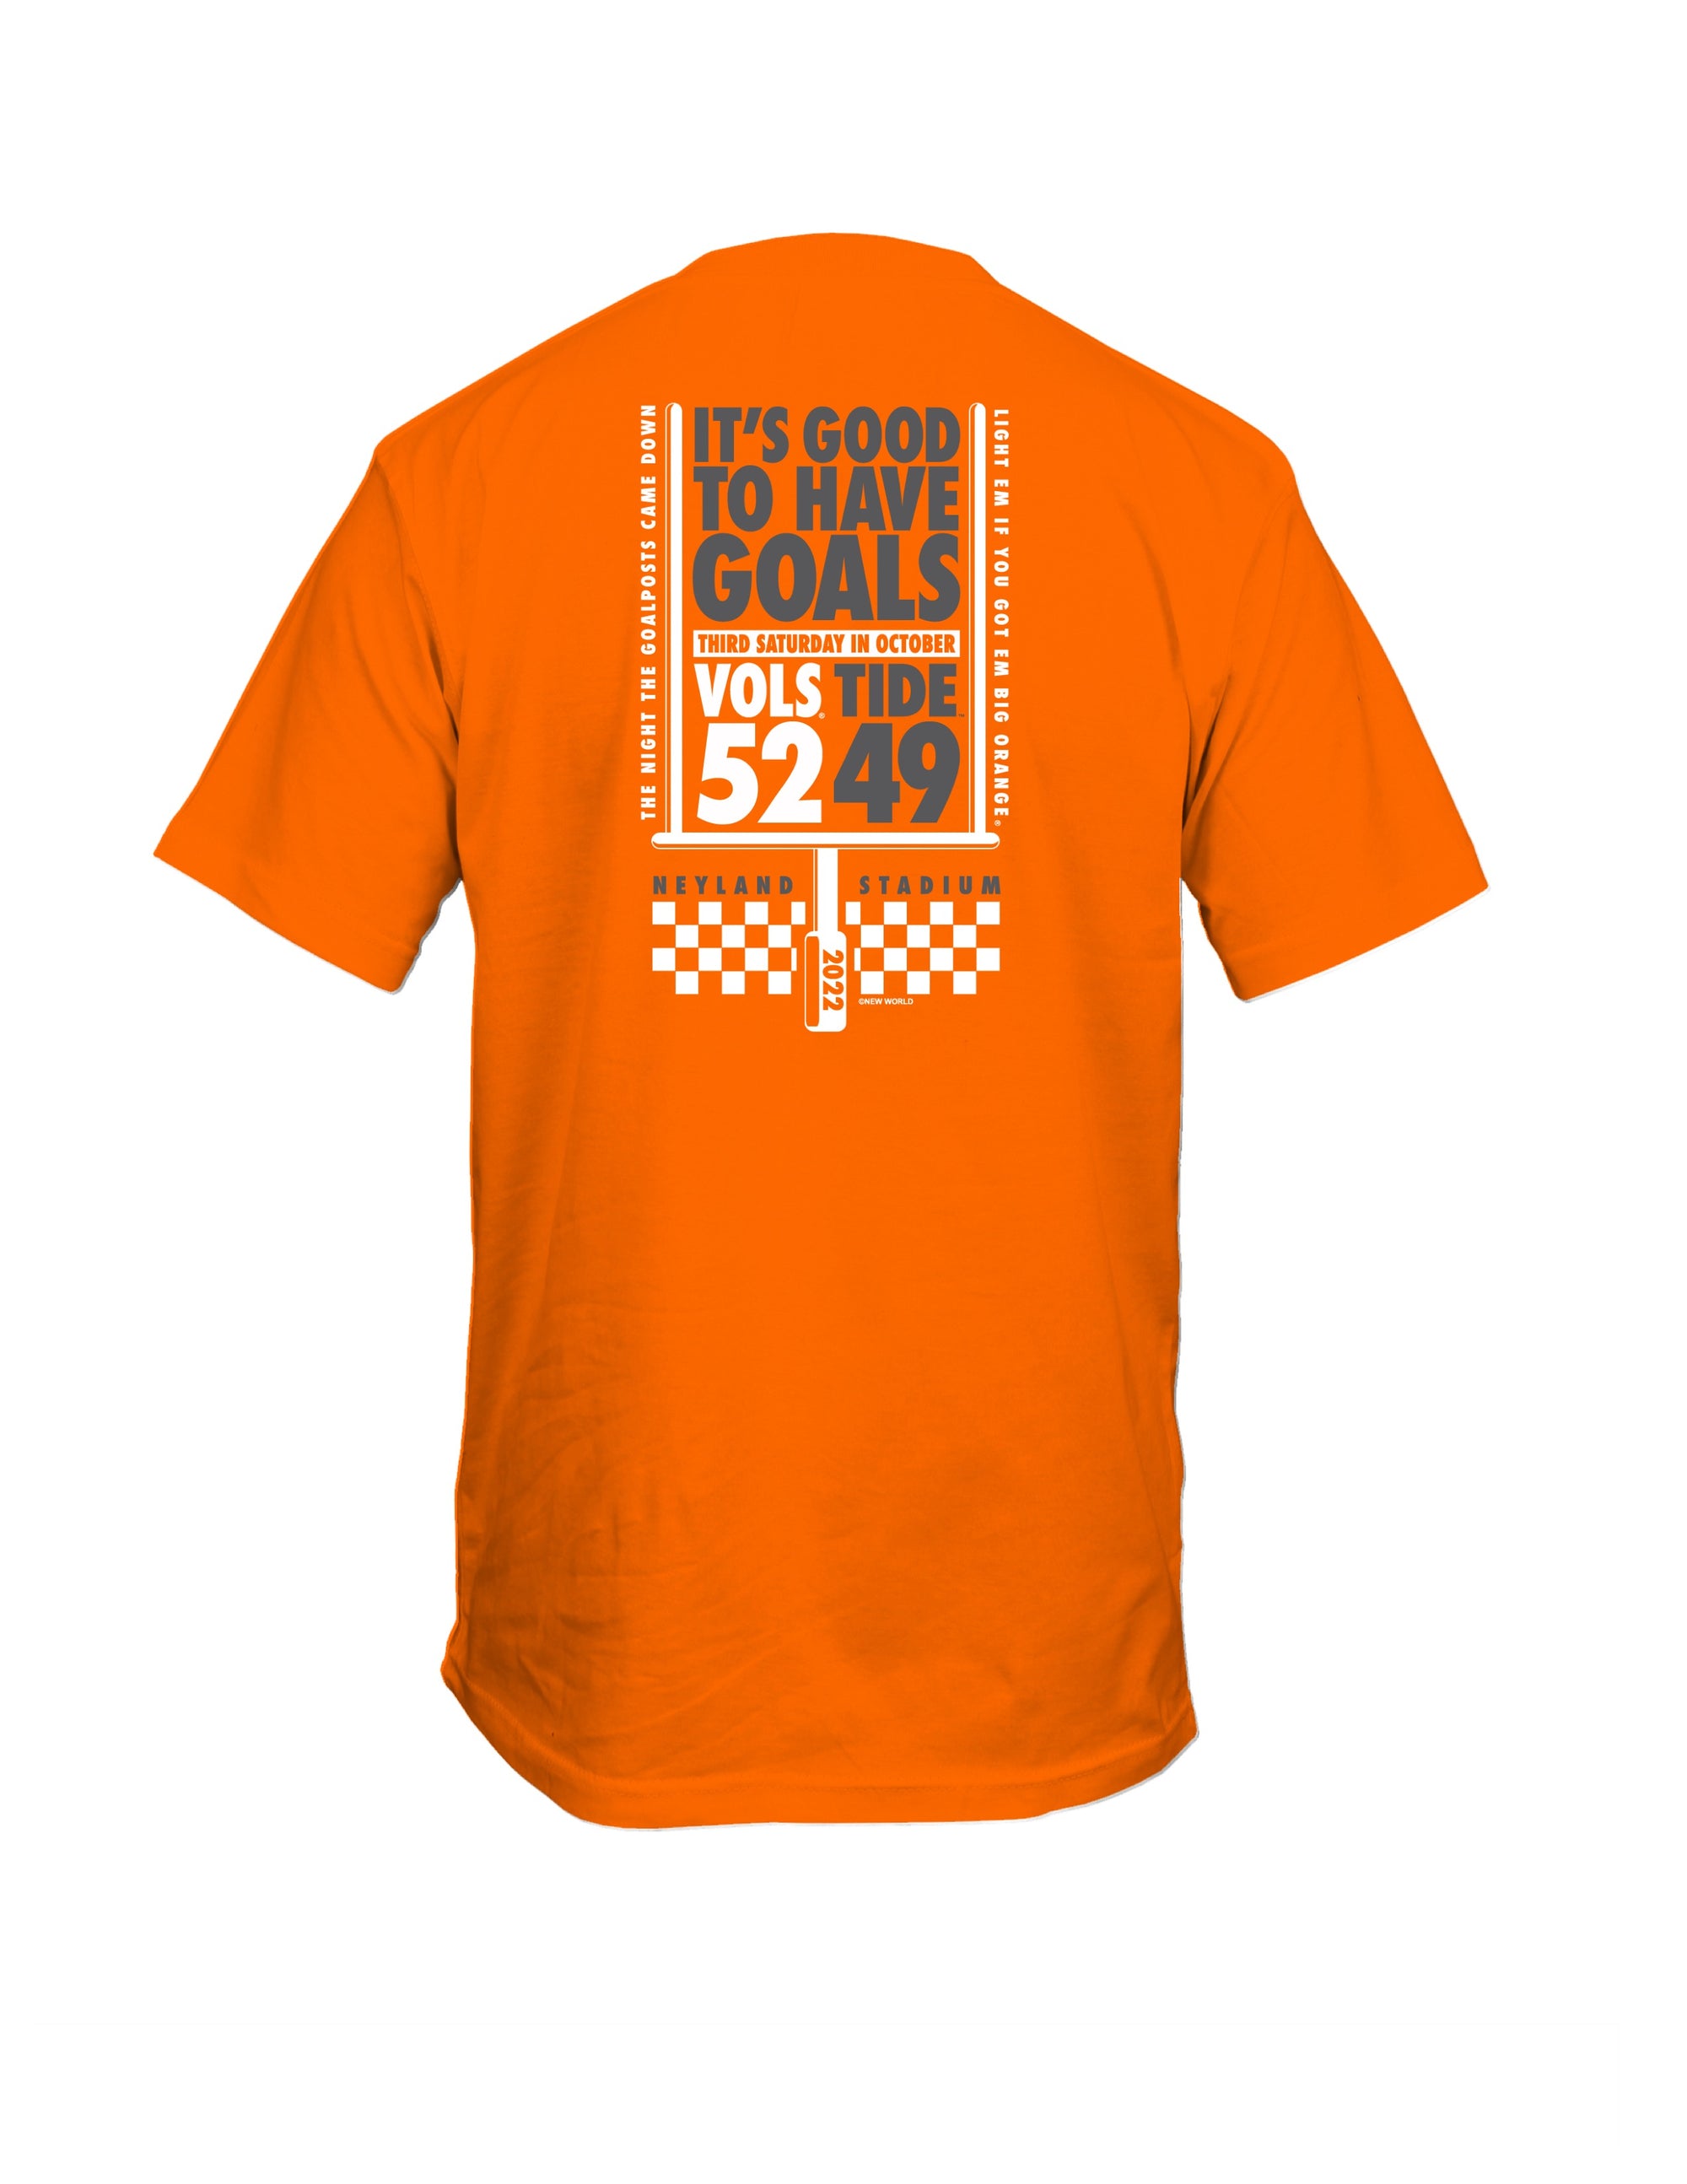 Tennessee Vols "Goals”